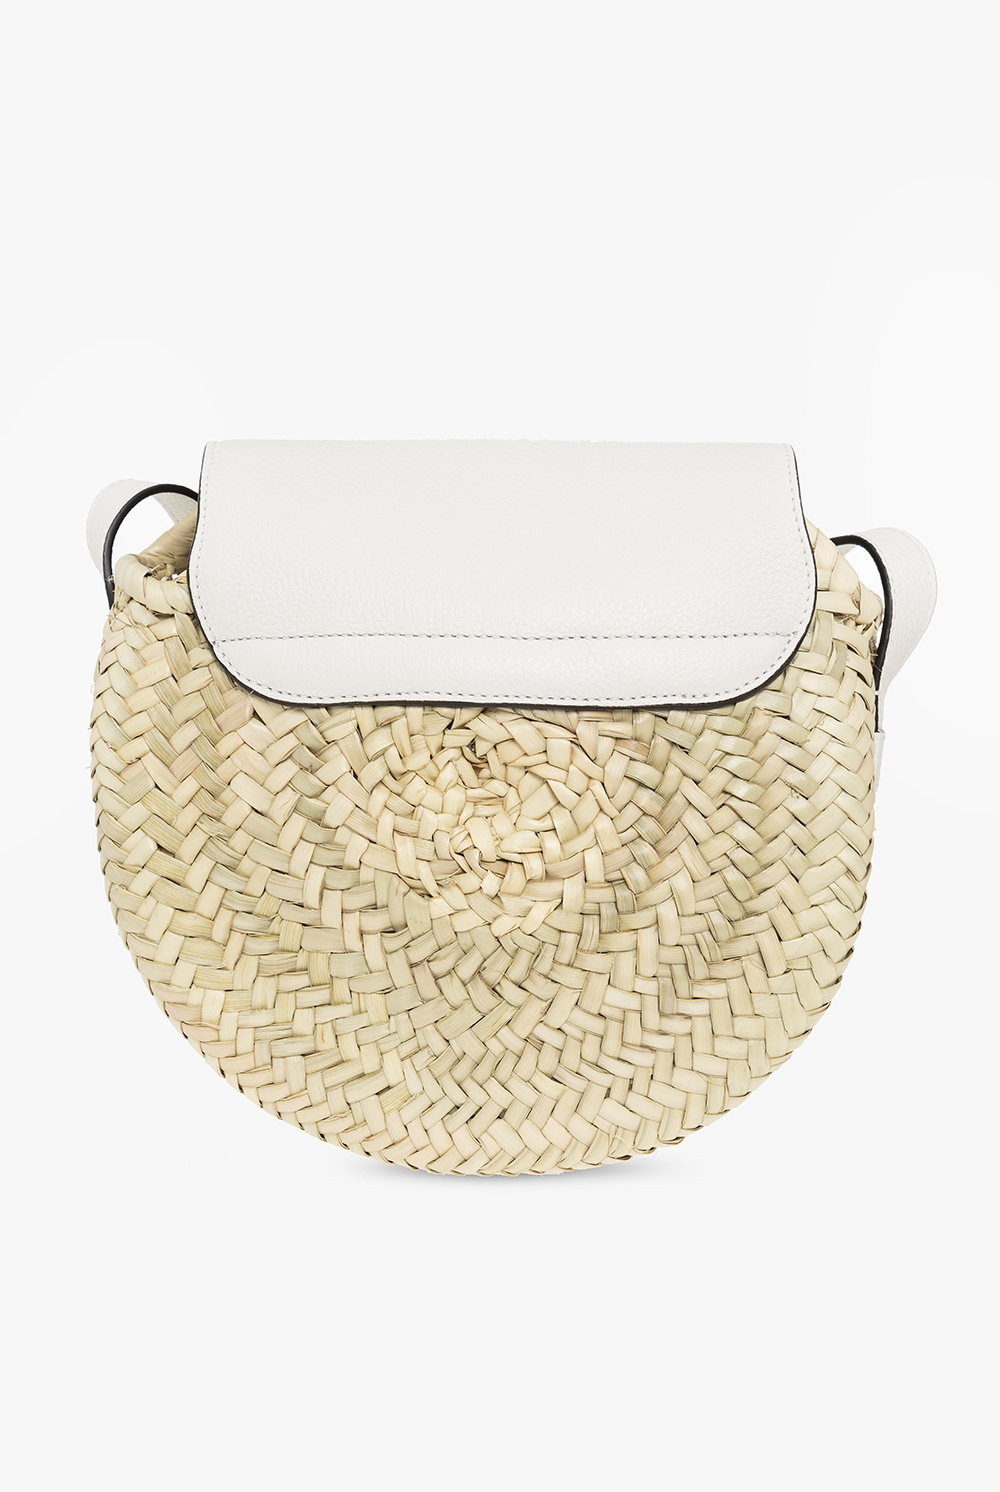 Chloé ‘Marcie Small’ handbag